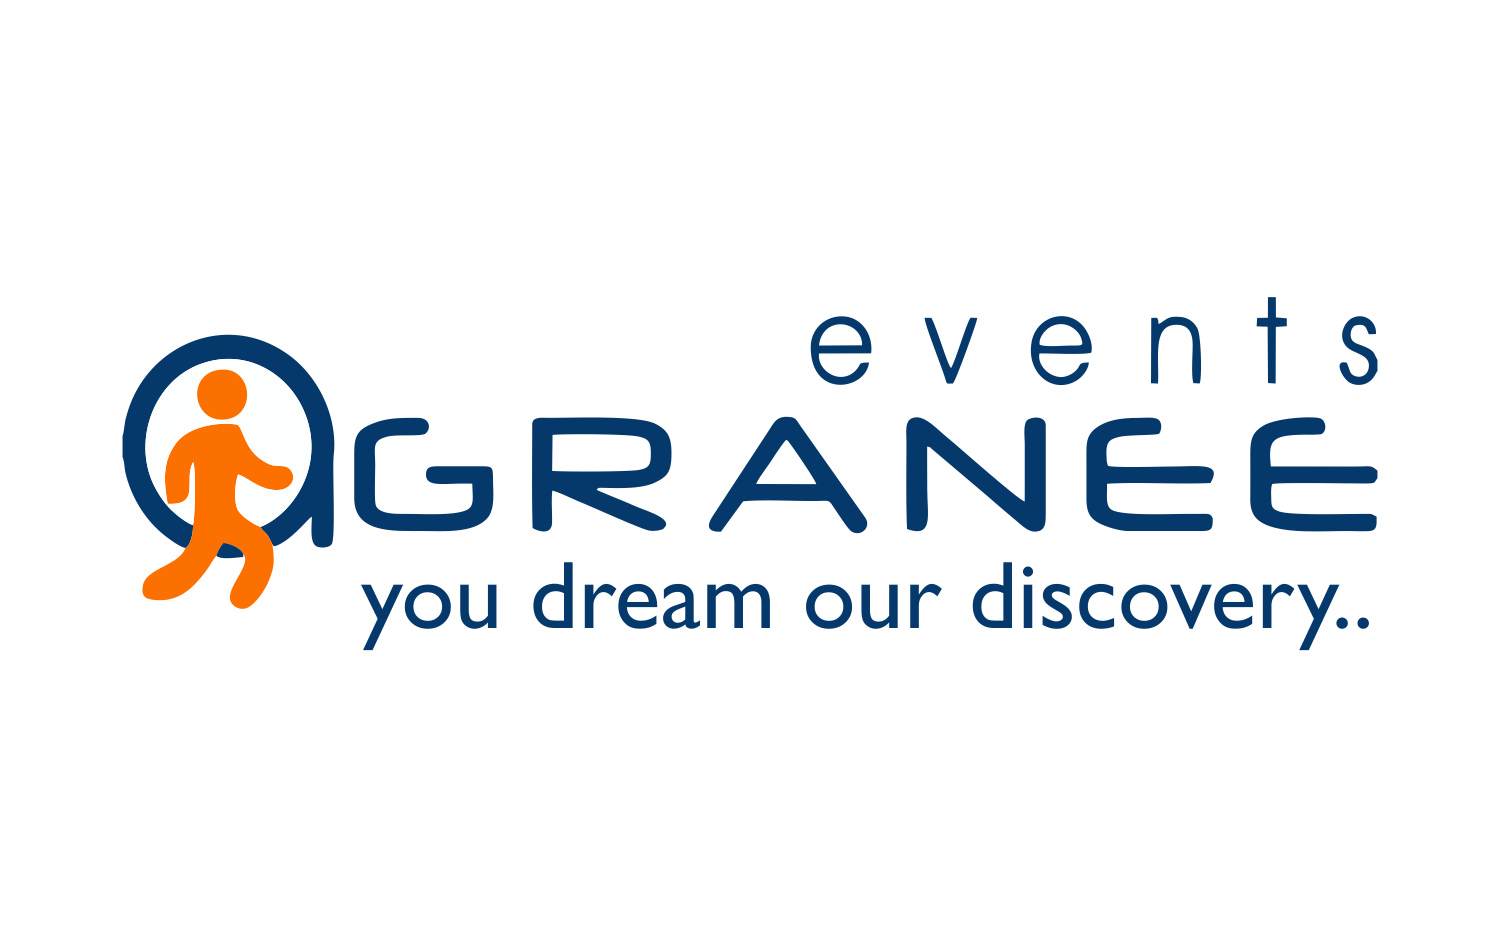 agranee-events-creativedgital